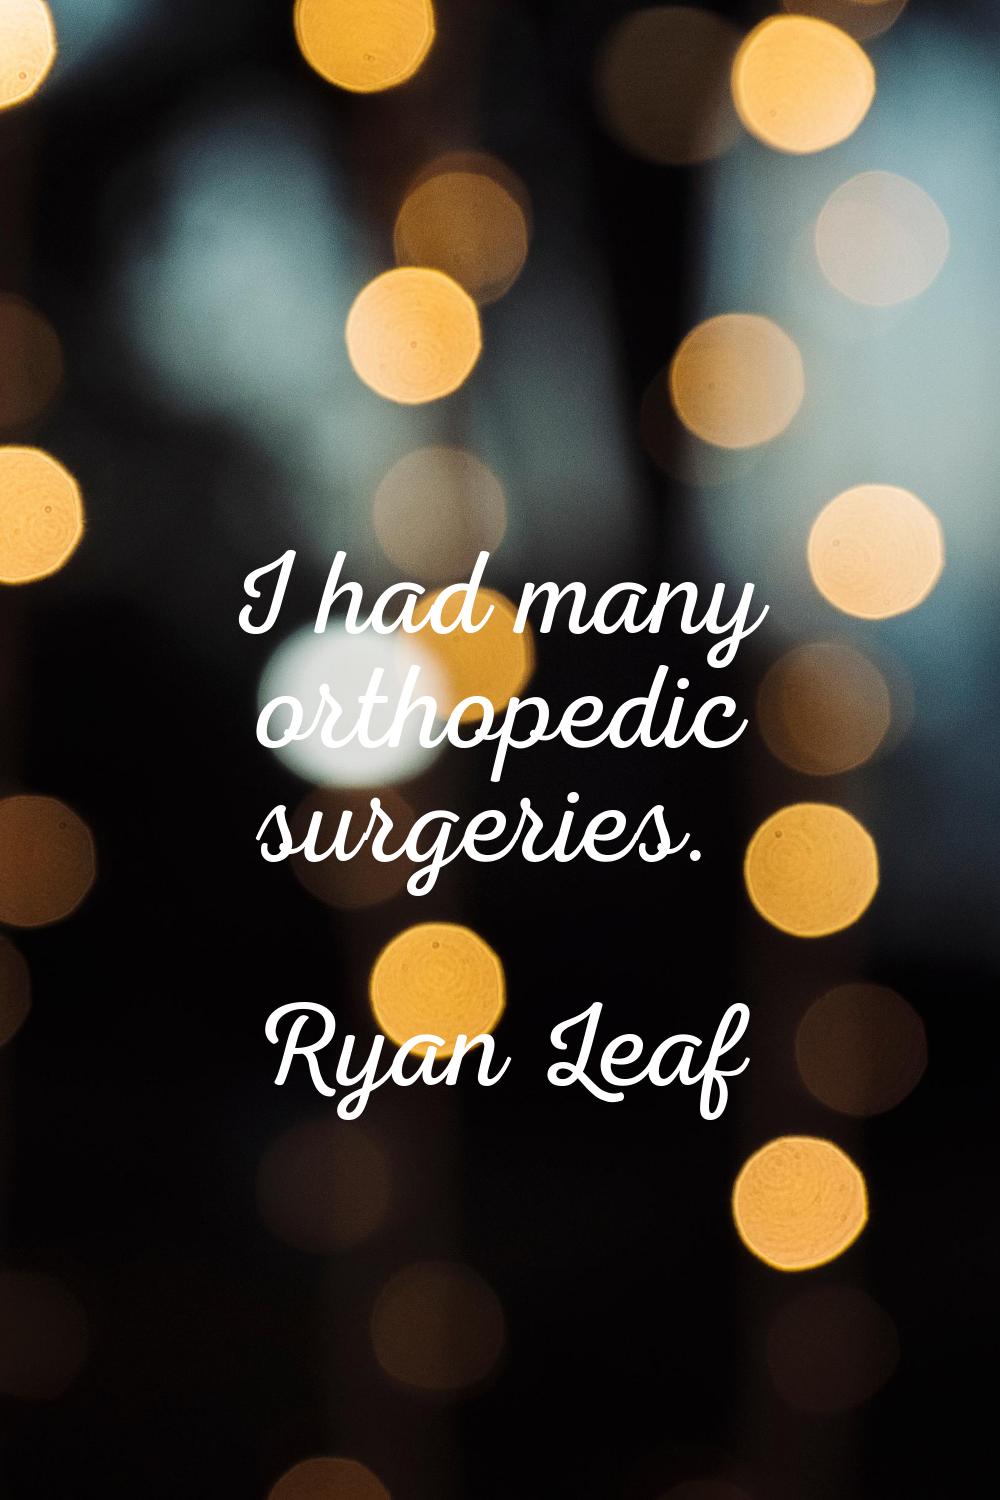 I had many orthopedic surgeries.